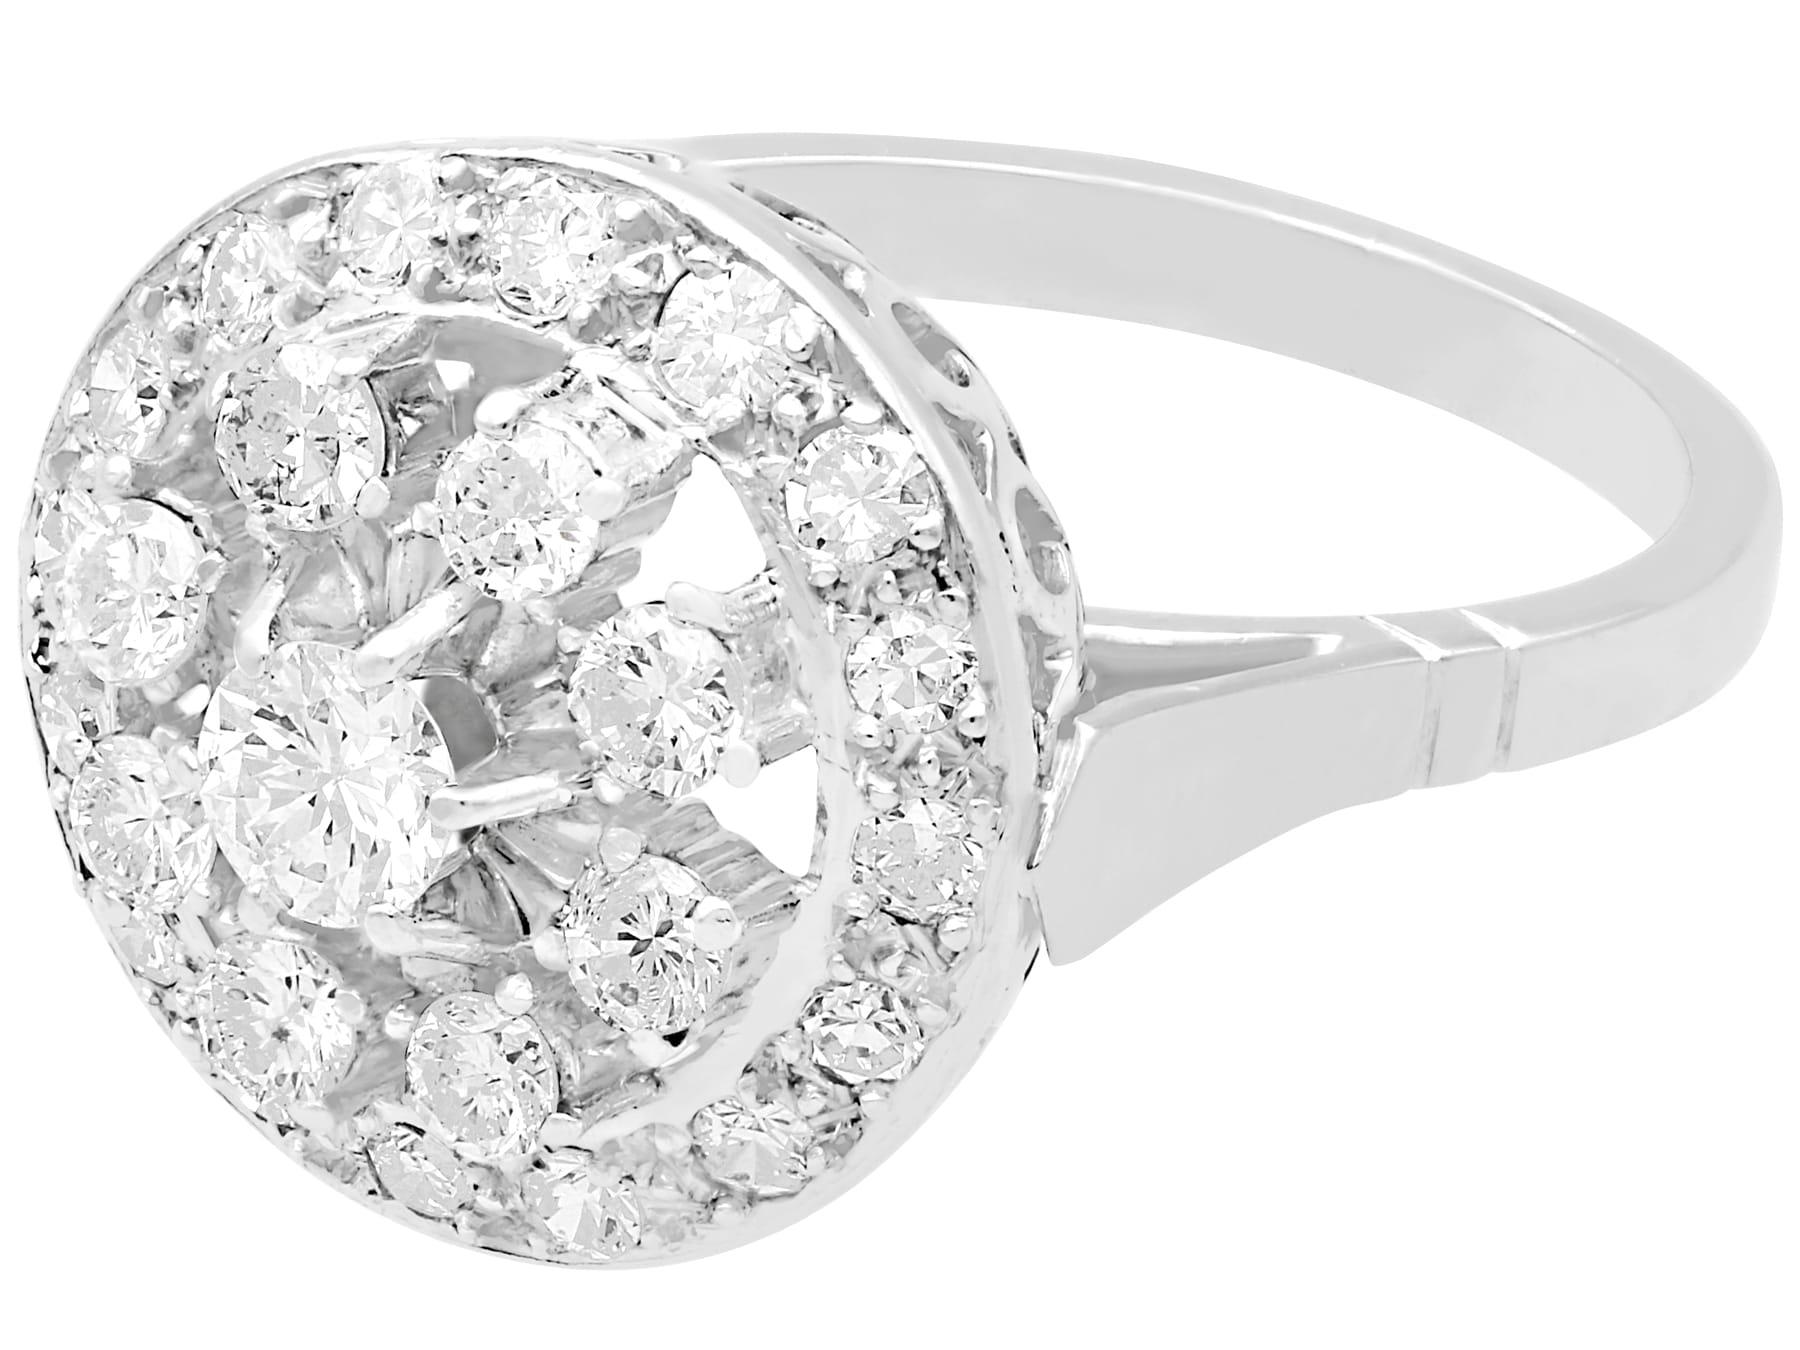 1.66 carat diamond ring